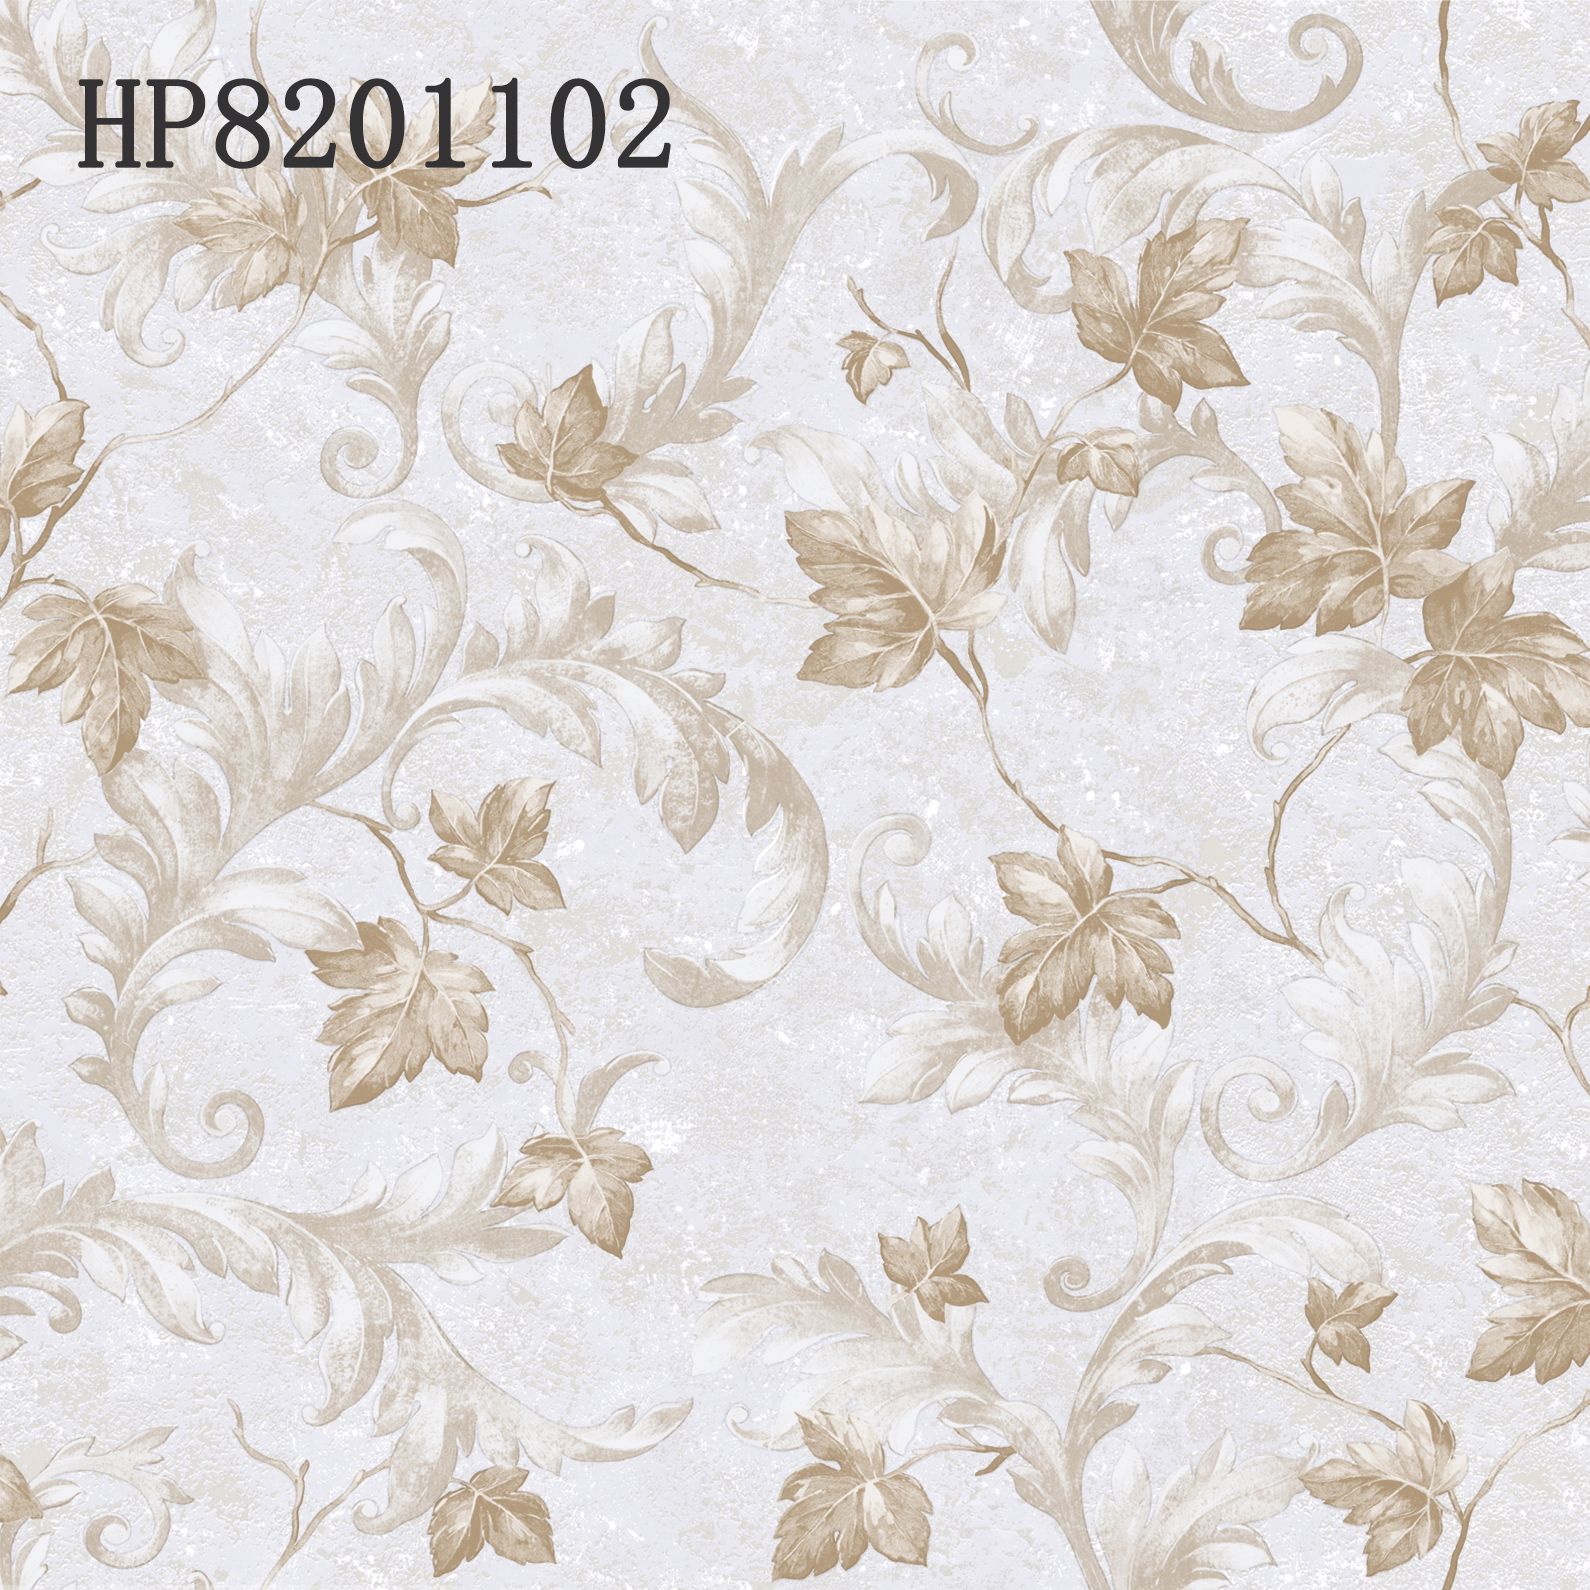 Environment-friendly Pvc Wallpapers HP82001102